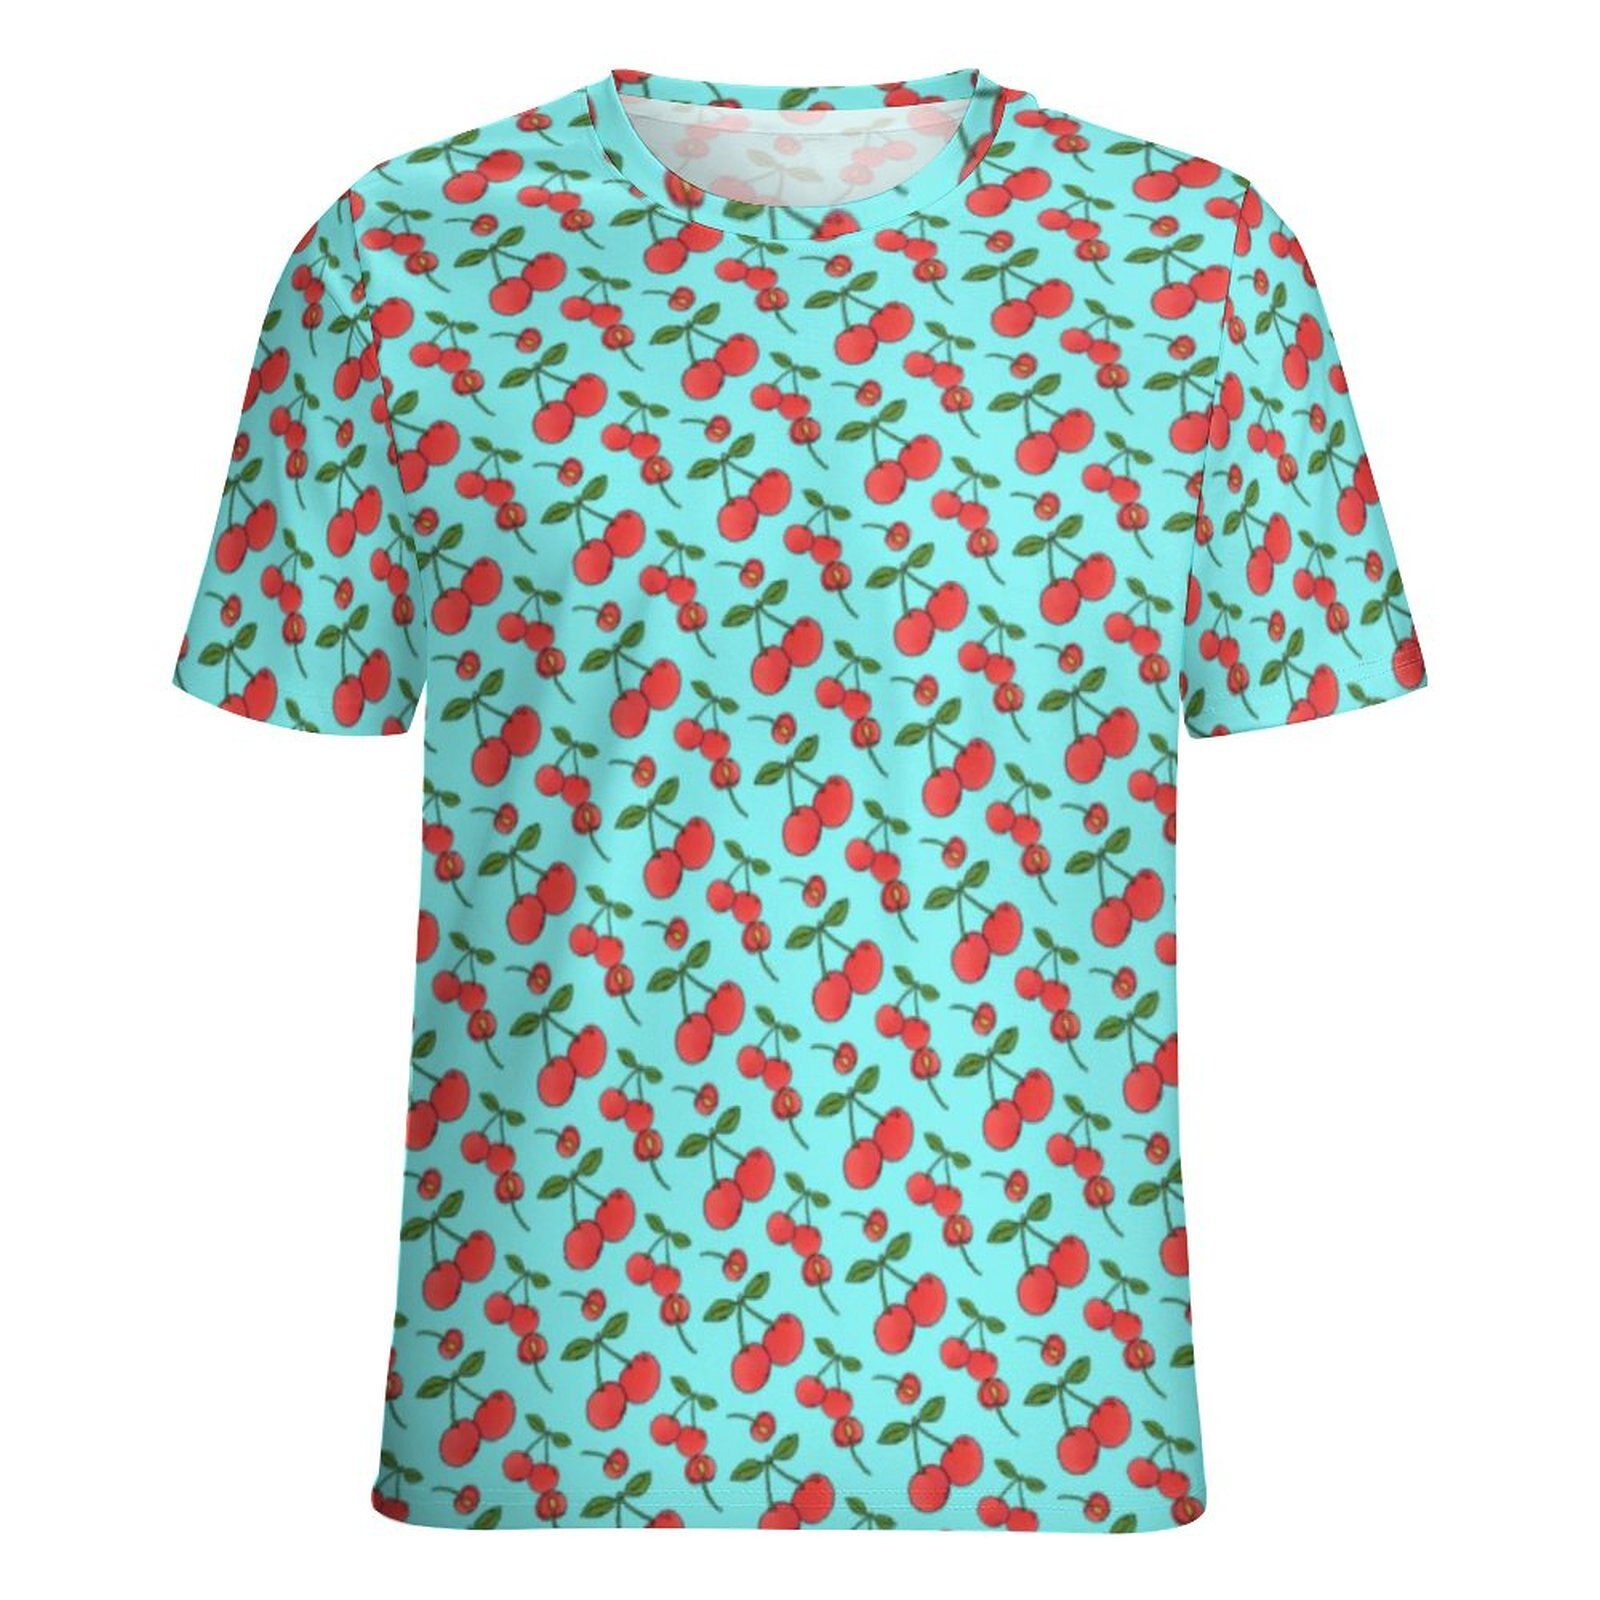 Retro Cherry T-Shirt Vintage Fruit Print Pretty T-Shirts Short-Sleeve Classic Tee Shirt Summer Custom Top Tees Large Size